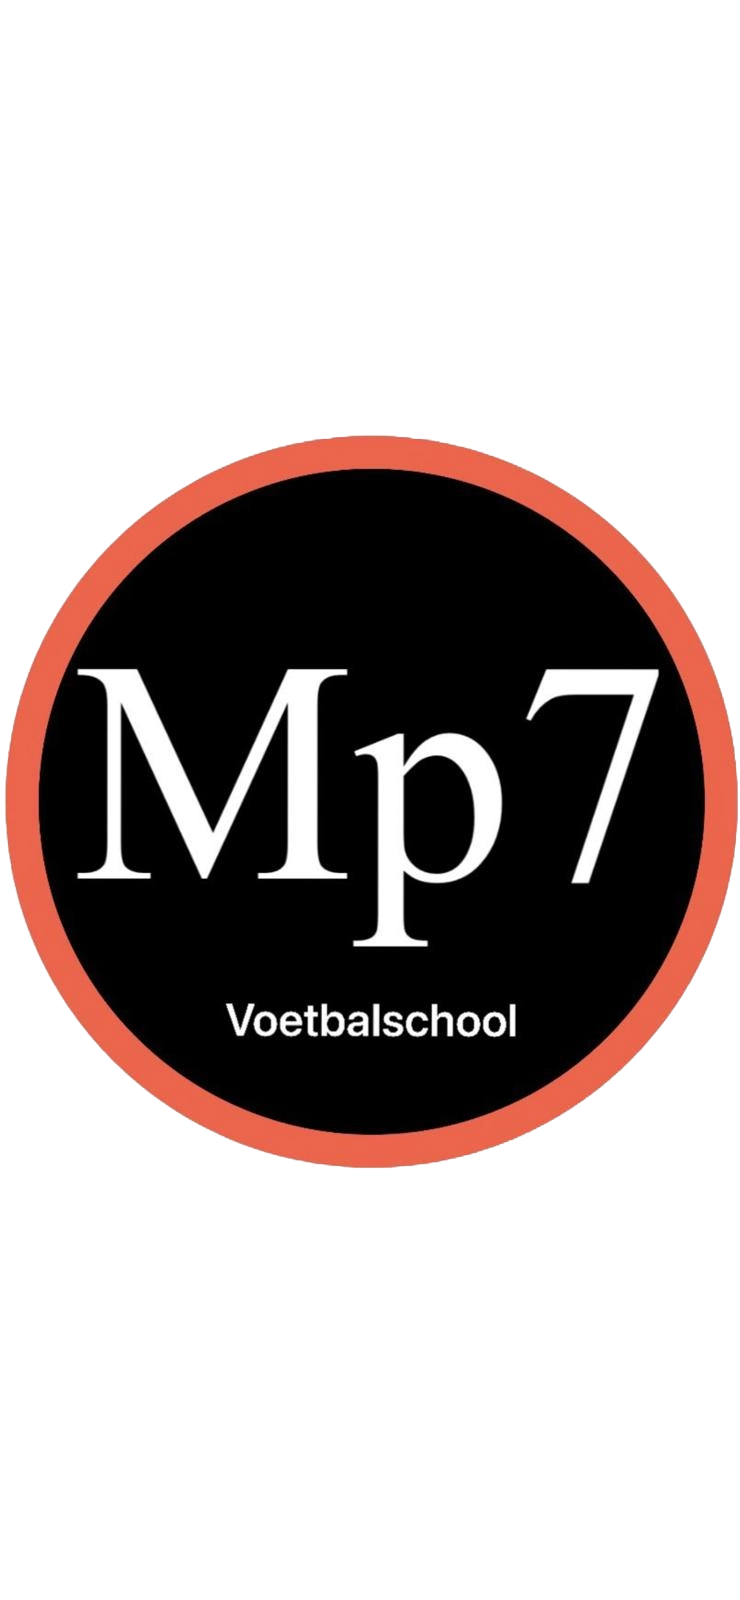 MP7 Voetbalschool Logo